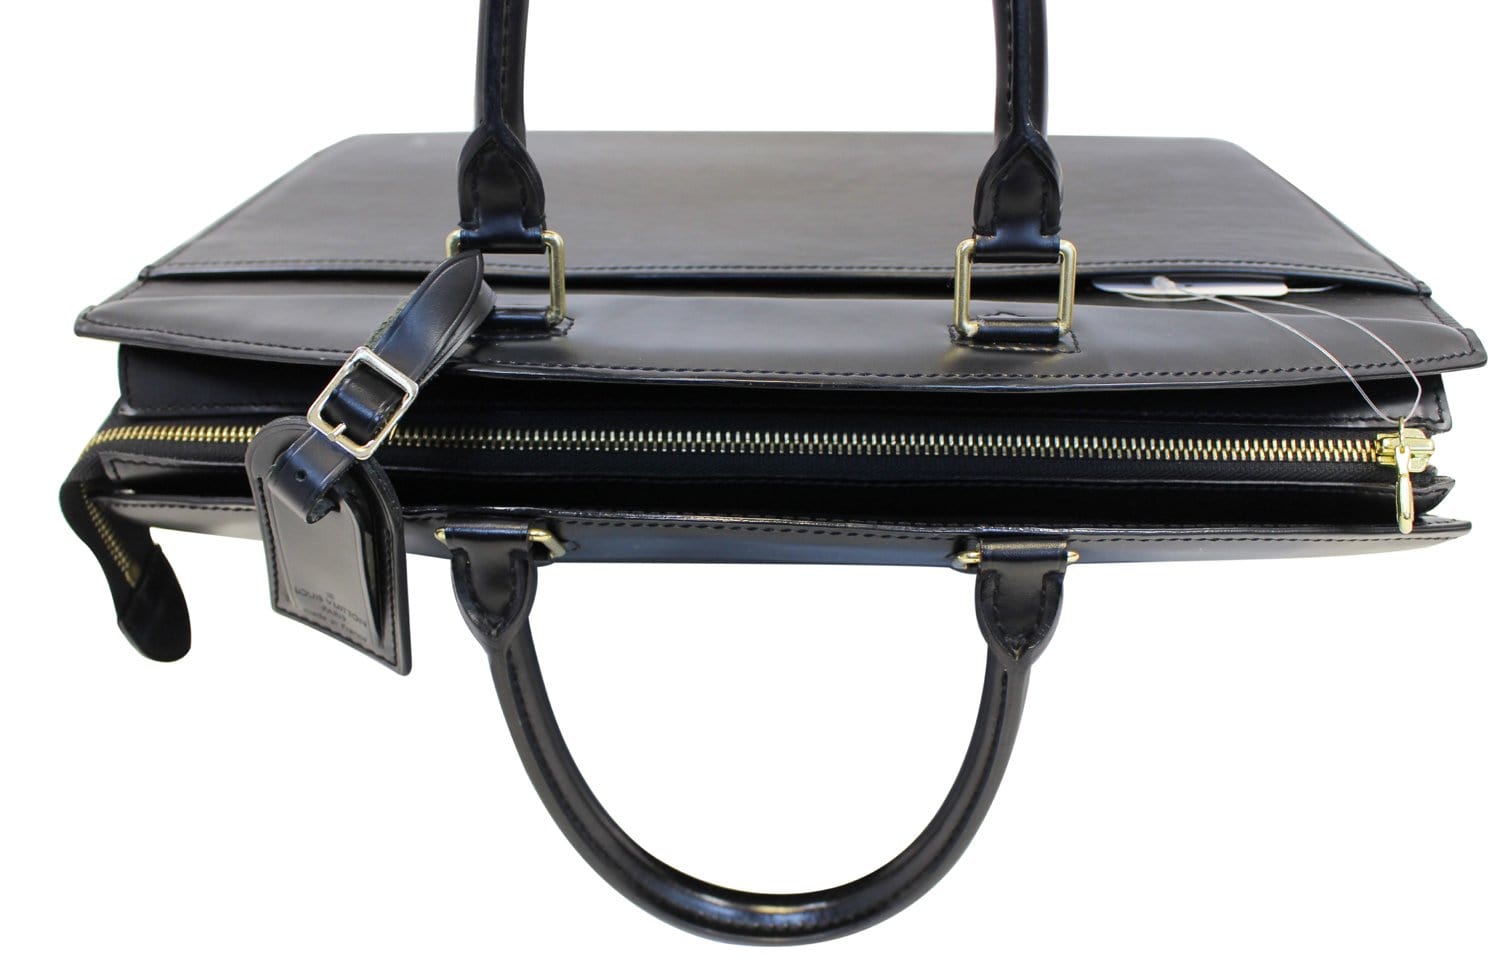 Louis Vuitton Riviera Handbag 334426